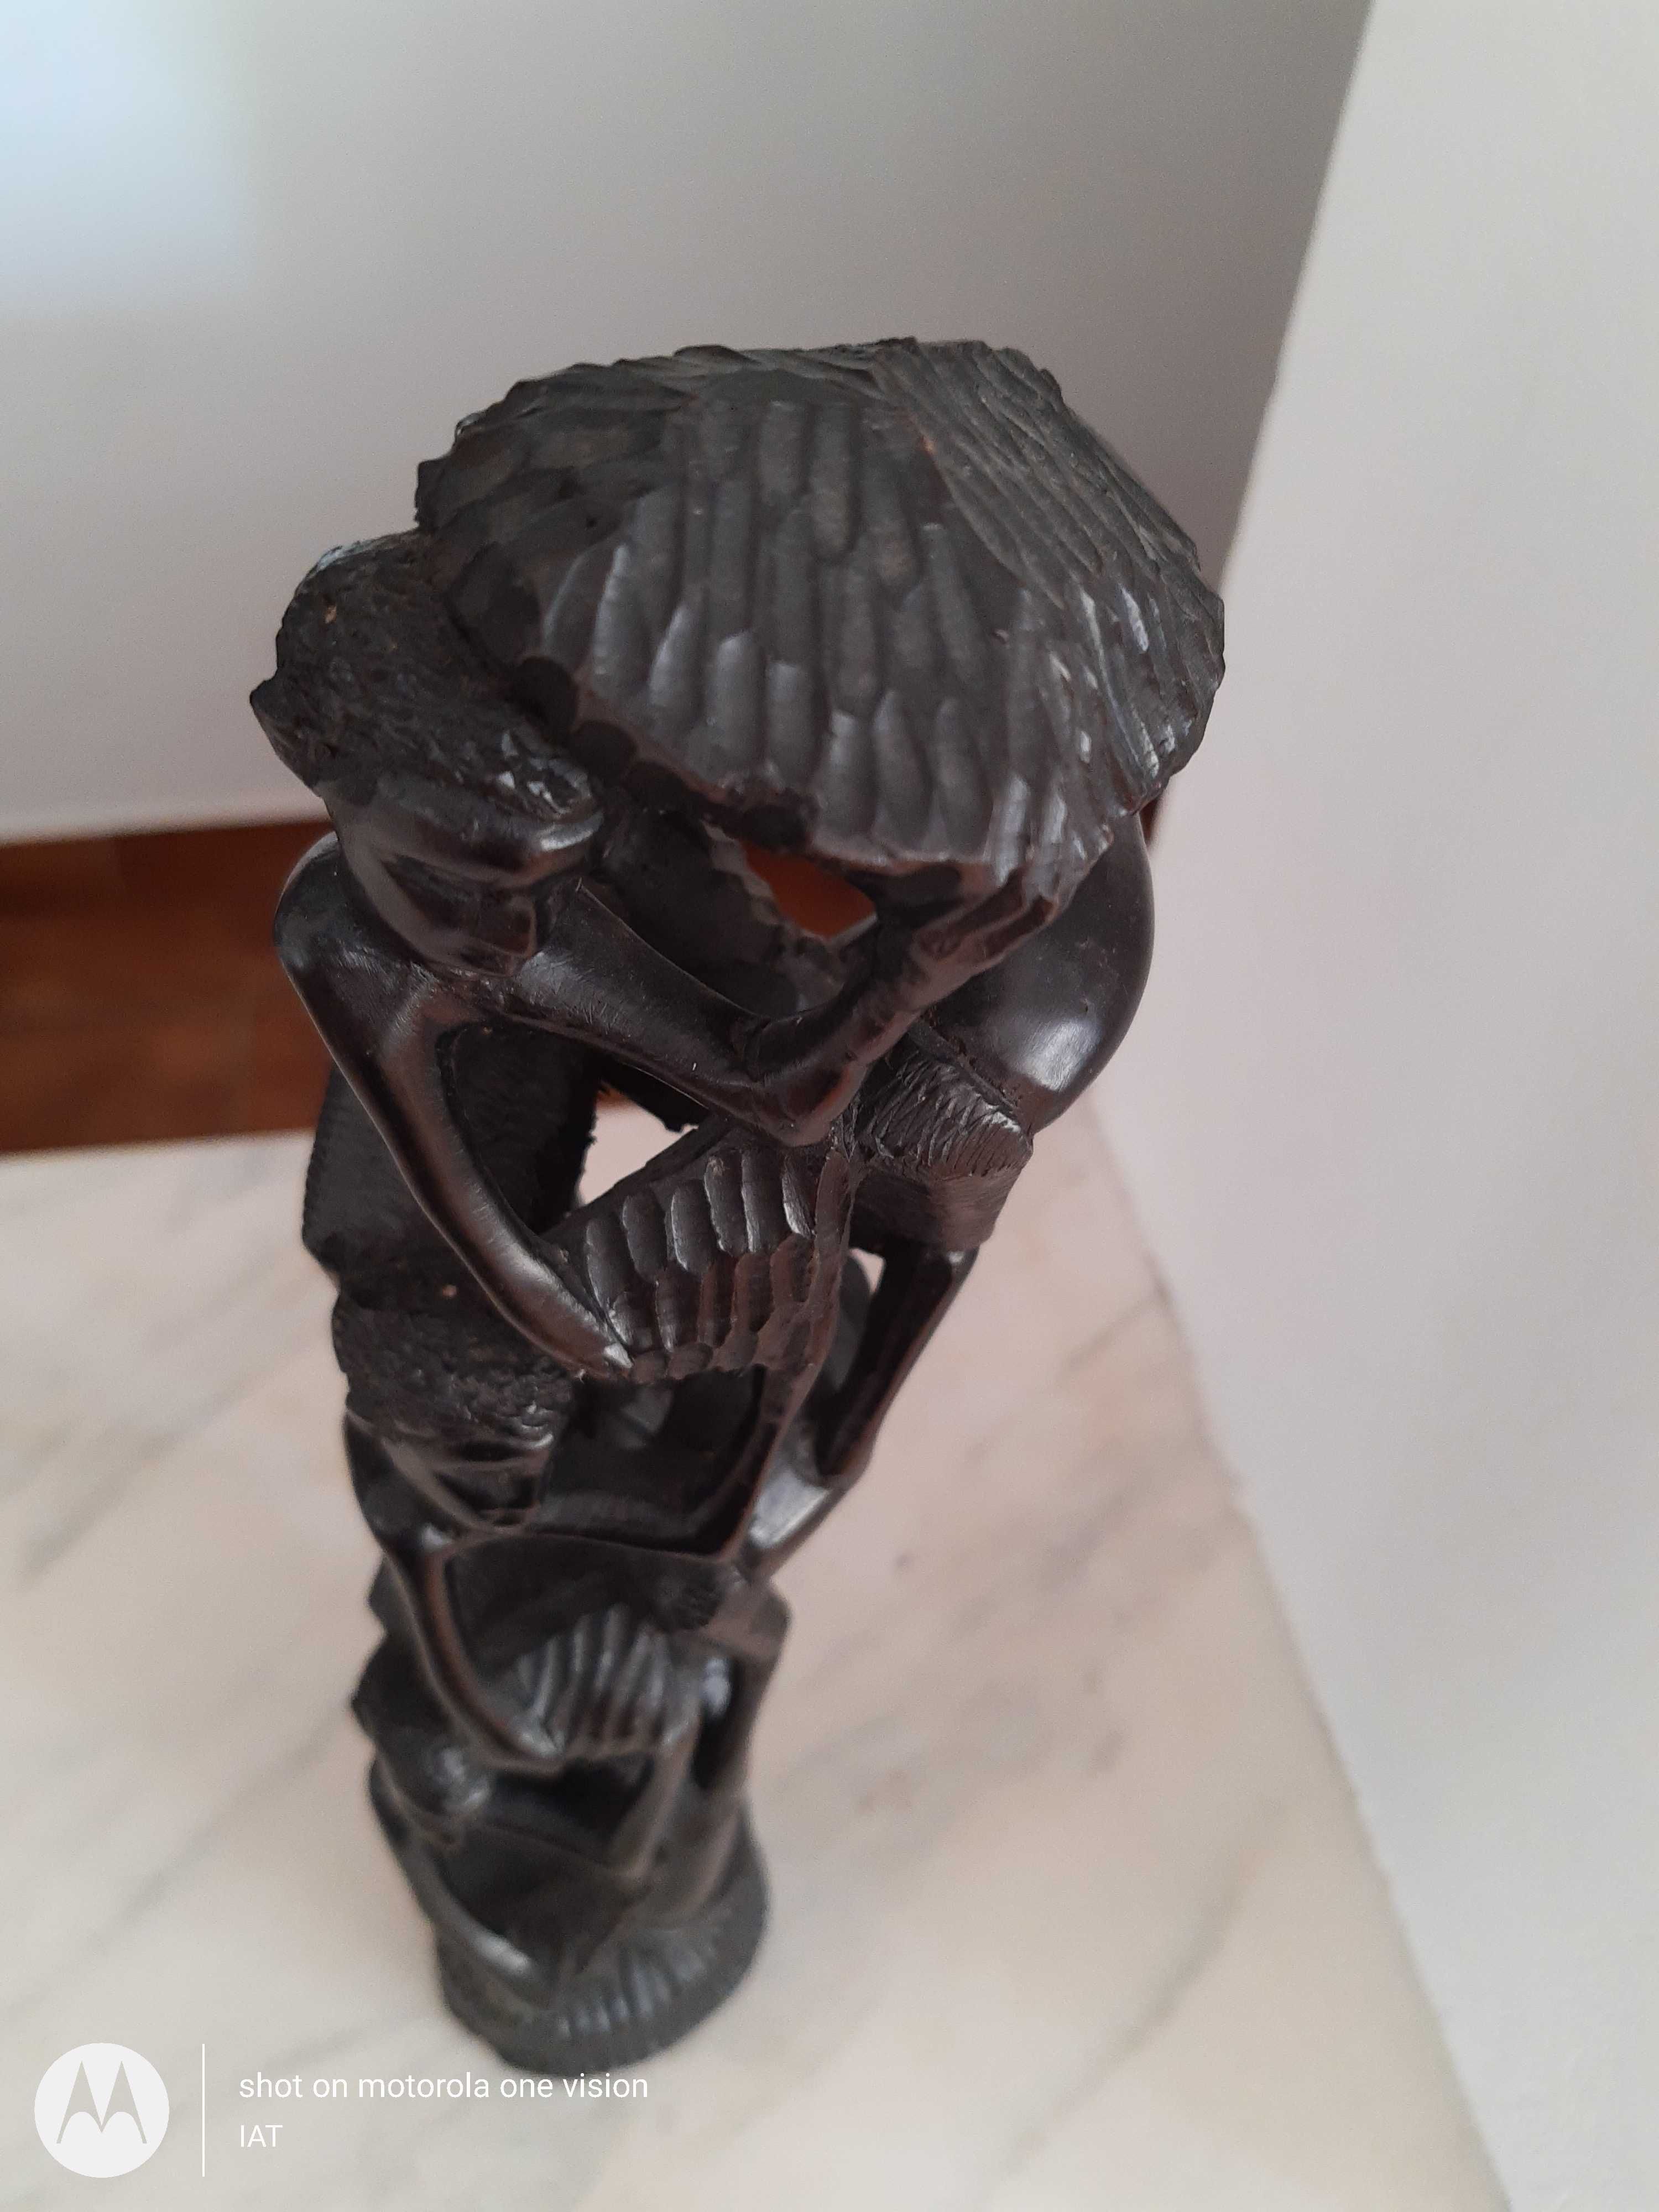 Statueta Africana Traditionala, Sculptata Manual in Lemn de Abanos